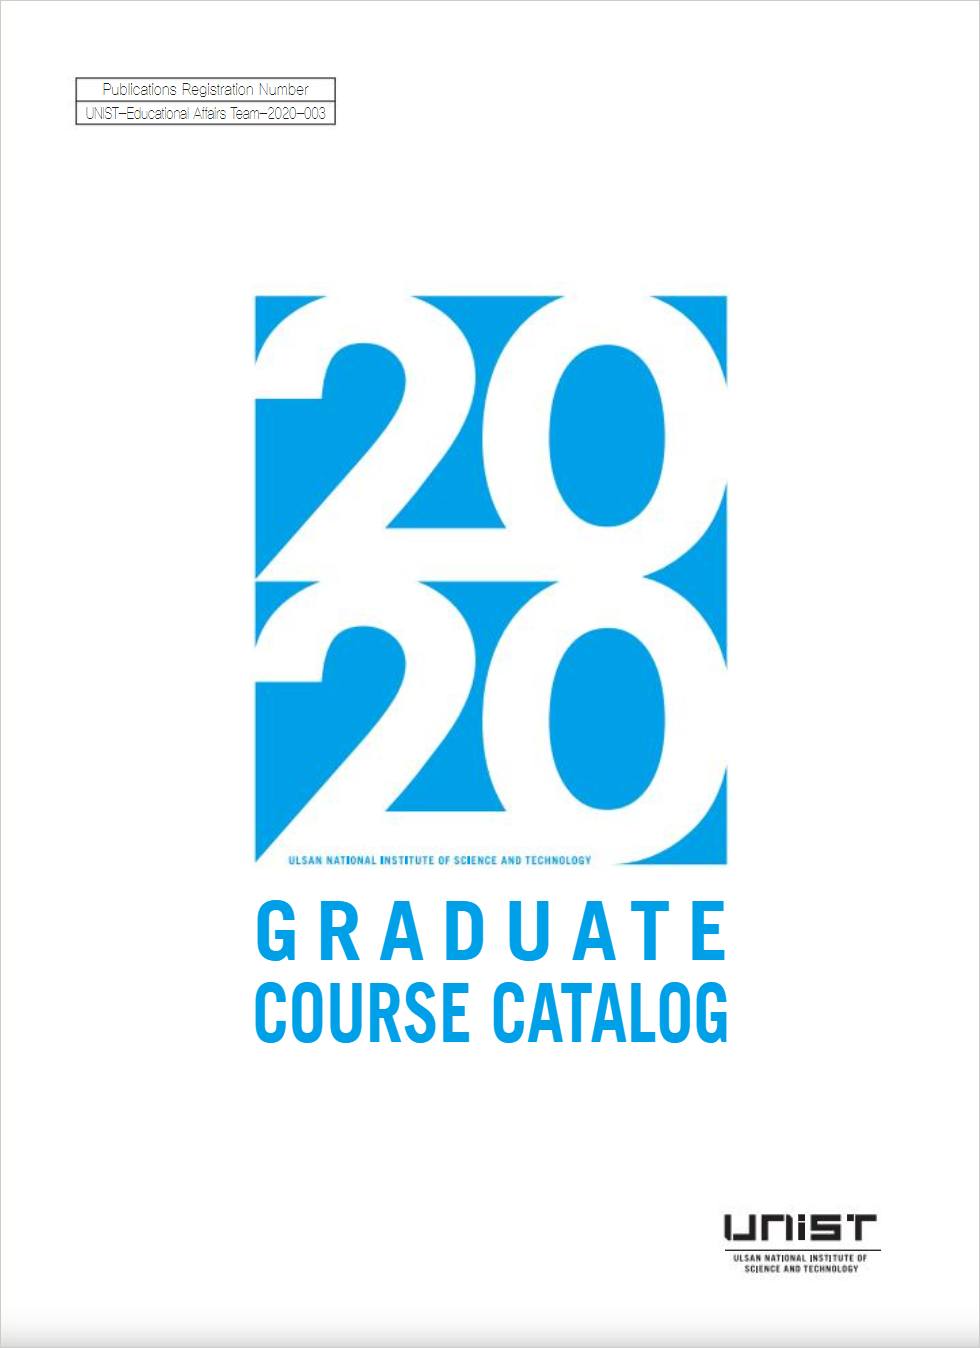 2020 Graduate Course Catalog